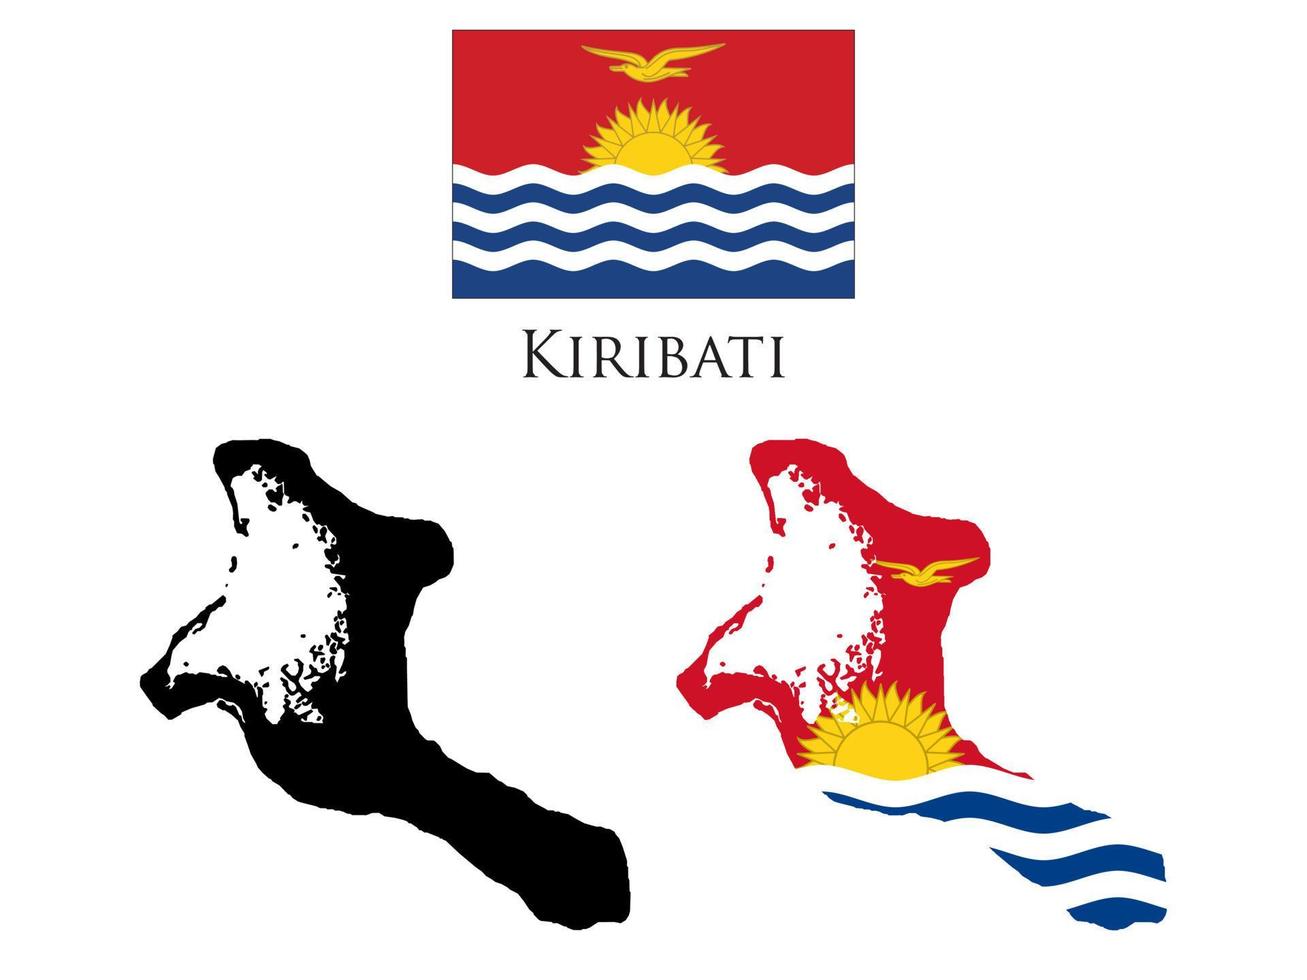 Kiribati drapeau et carte vecteur